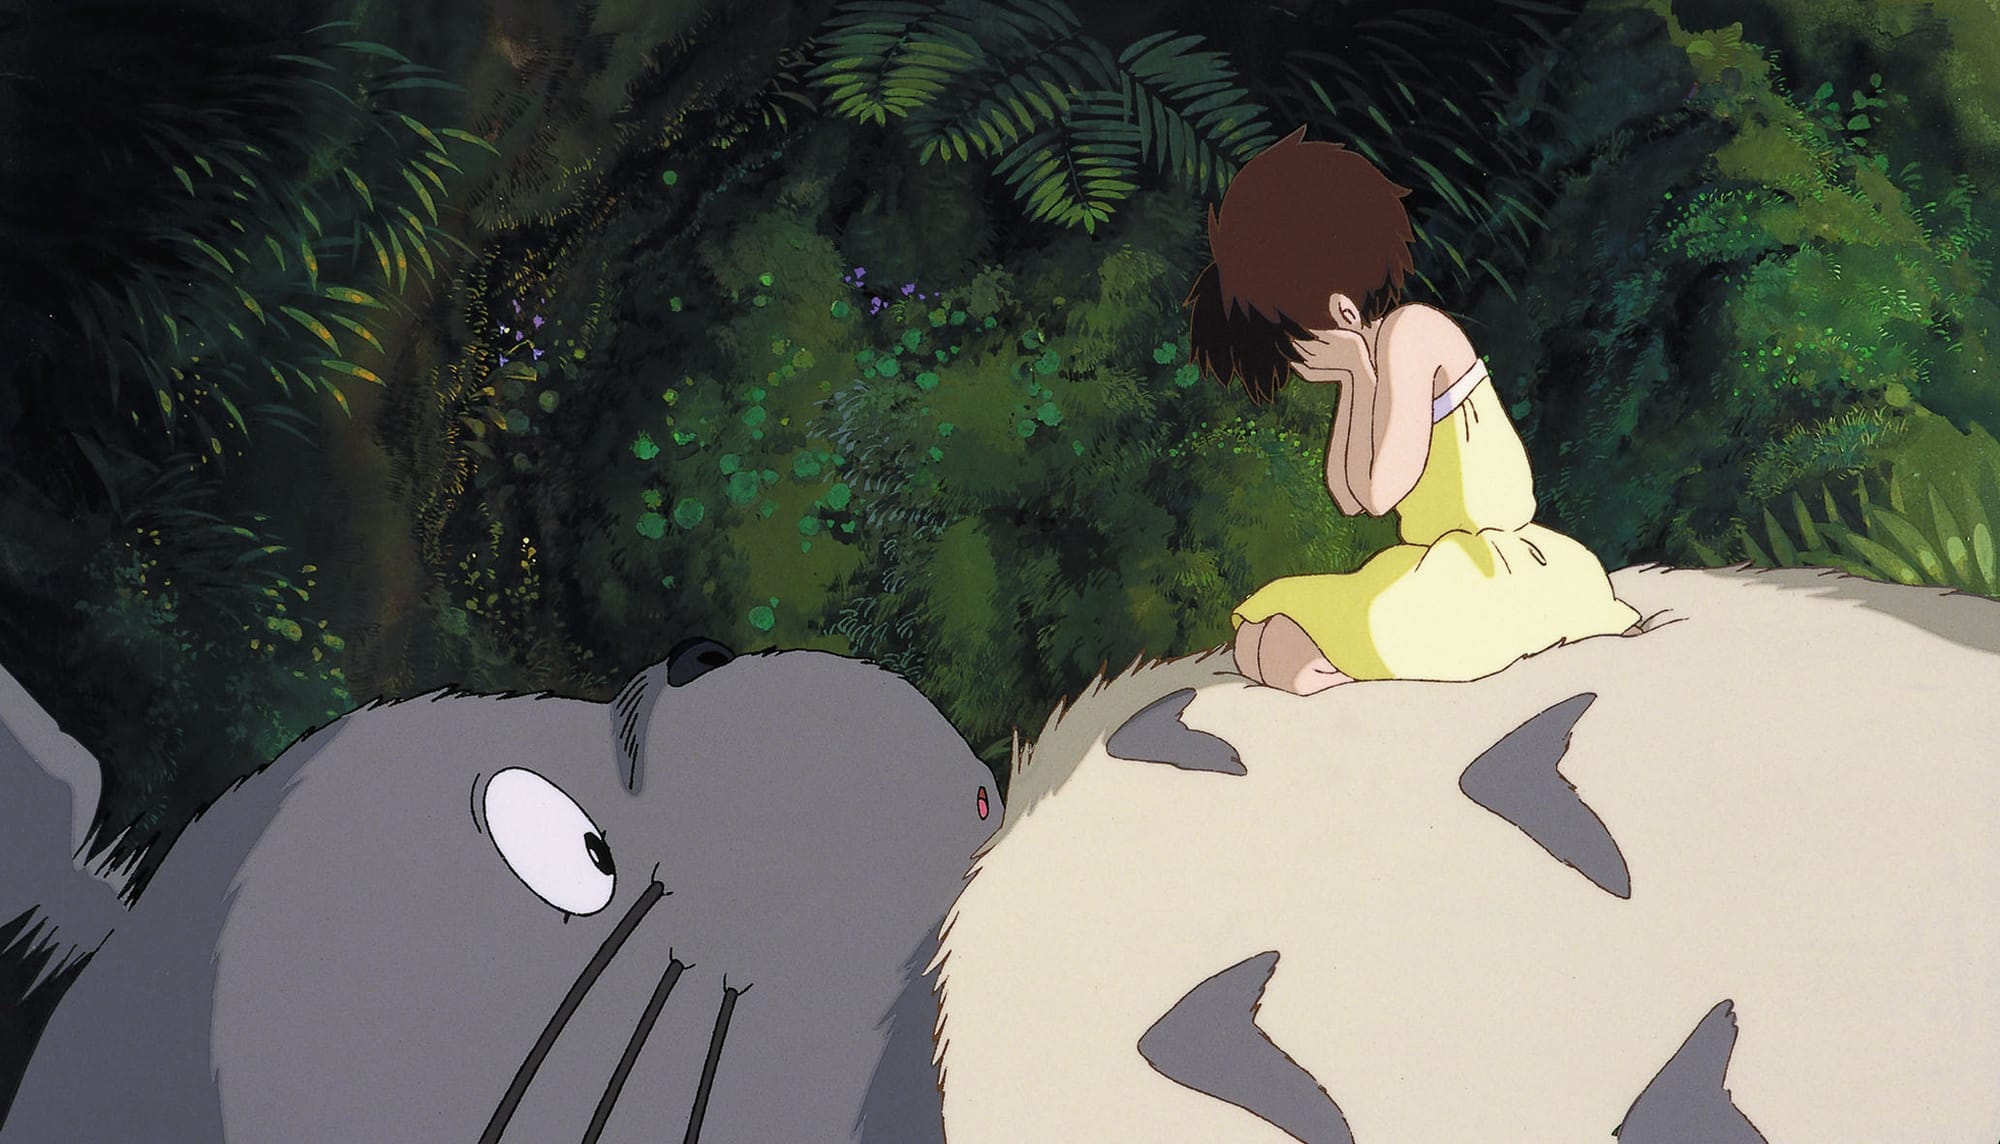 A Movie Review Of Hayao Miyazaki's My Neighbor Totoro